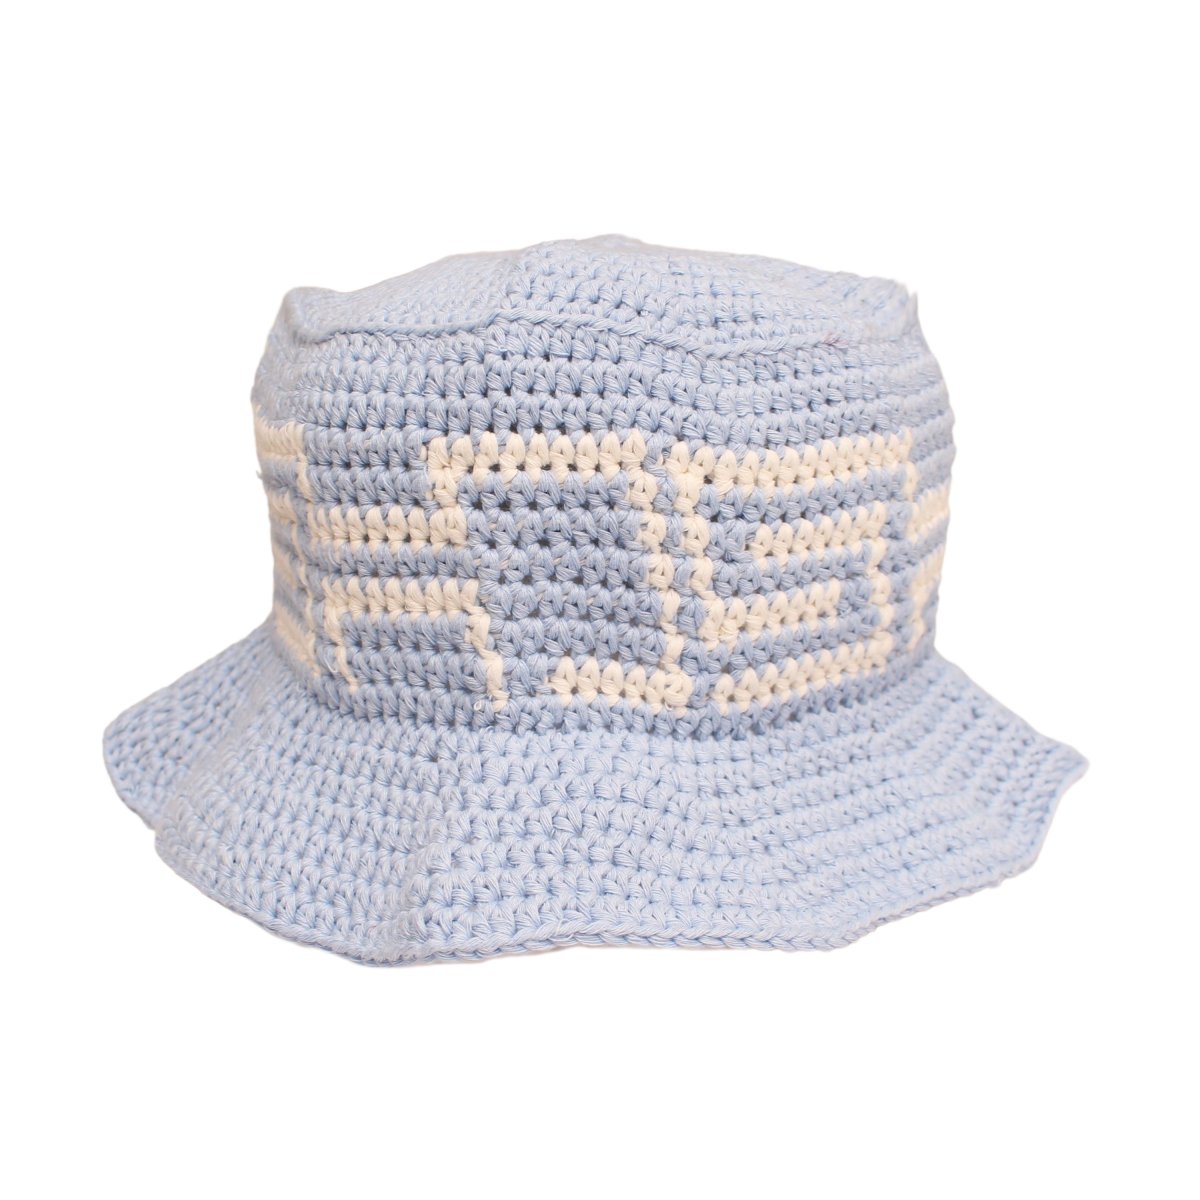  SHD knit bucket【BABY BLUE / WHITE】